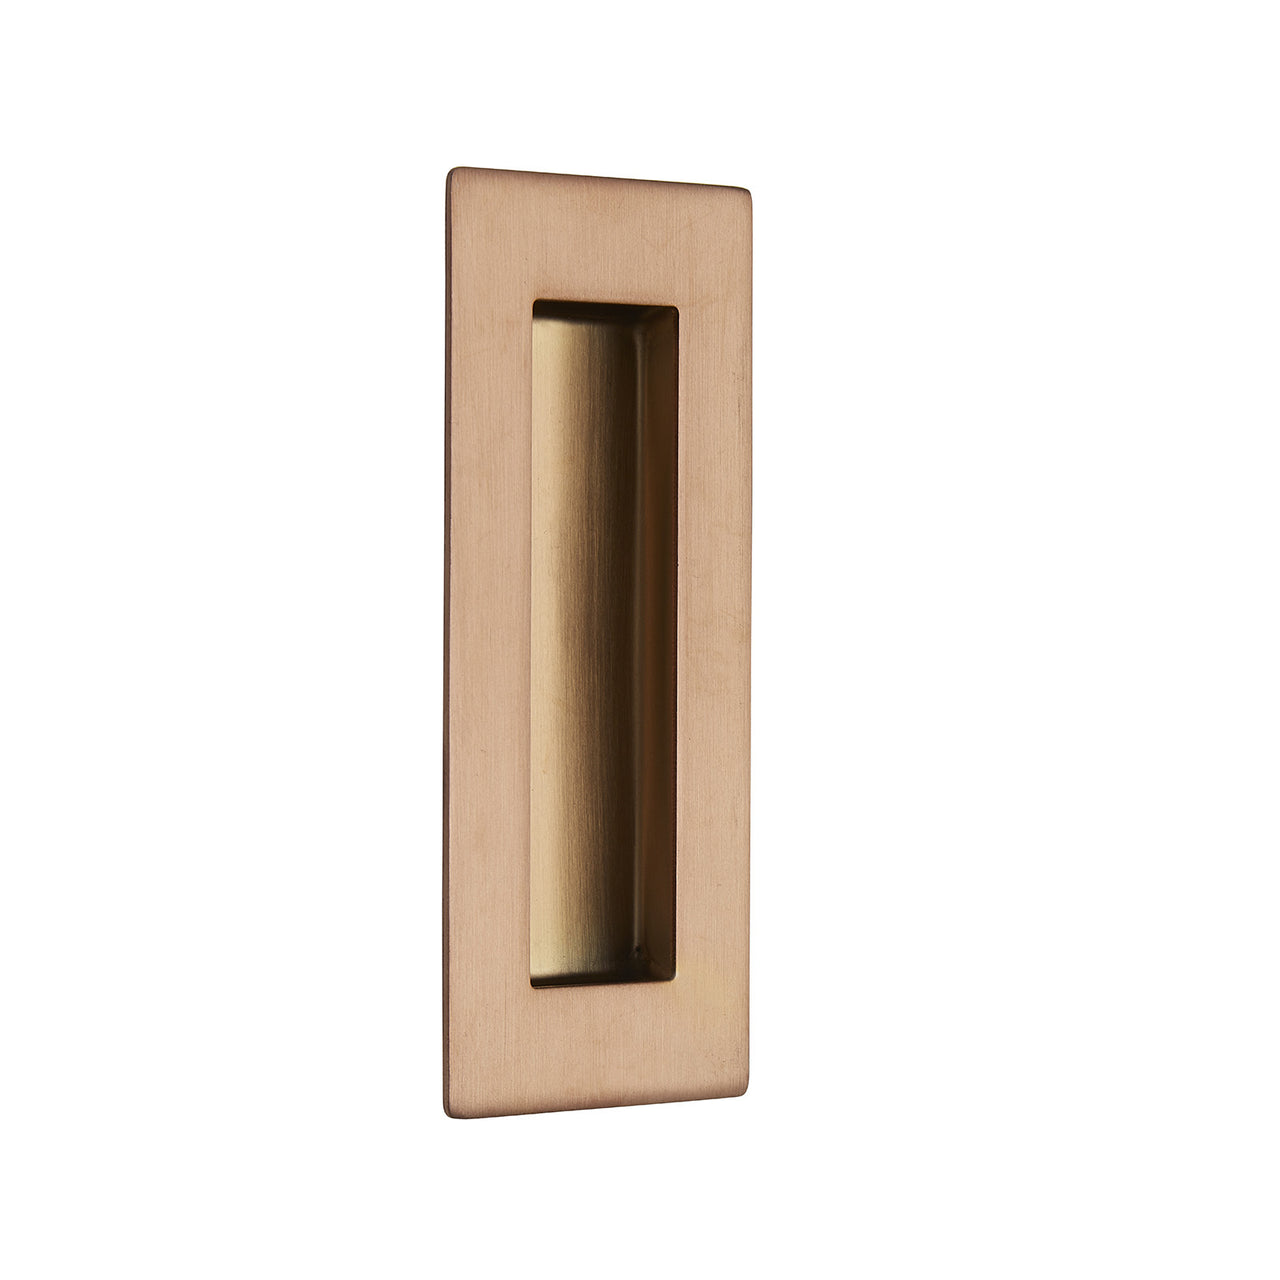 Copper Pocket/Sliding Door Rectangular Flush Pull Handle - 120mm x 50mm